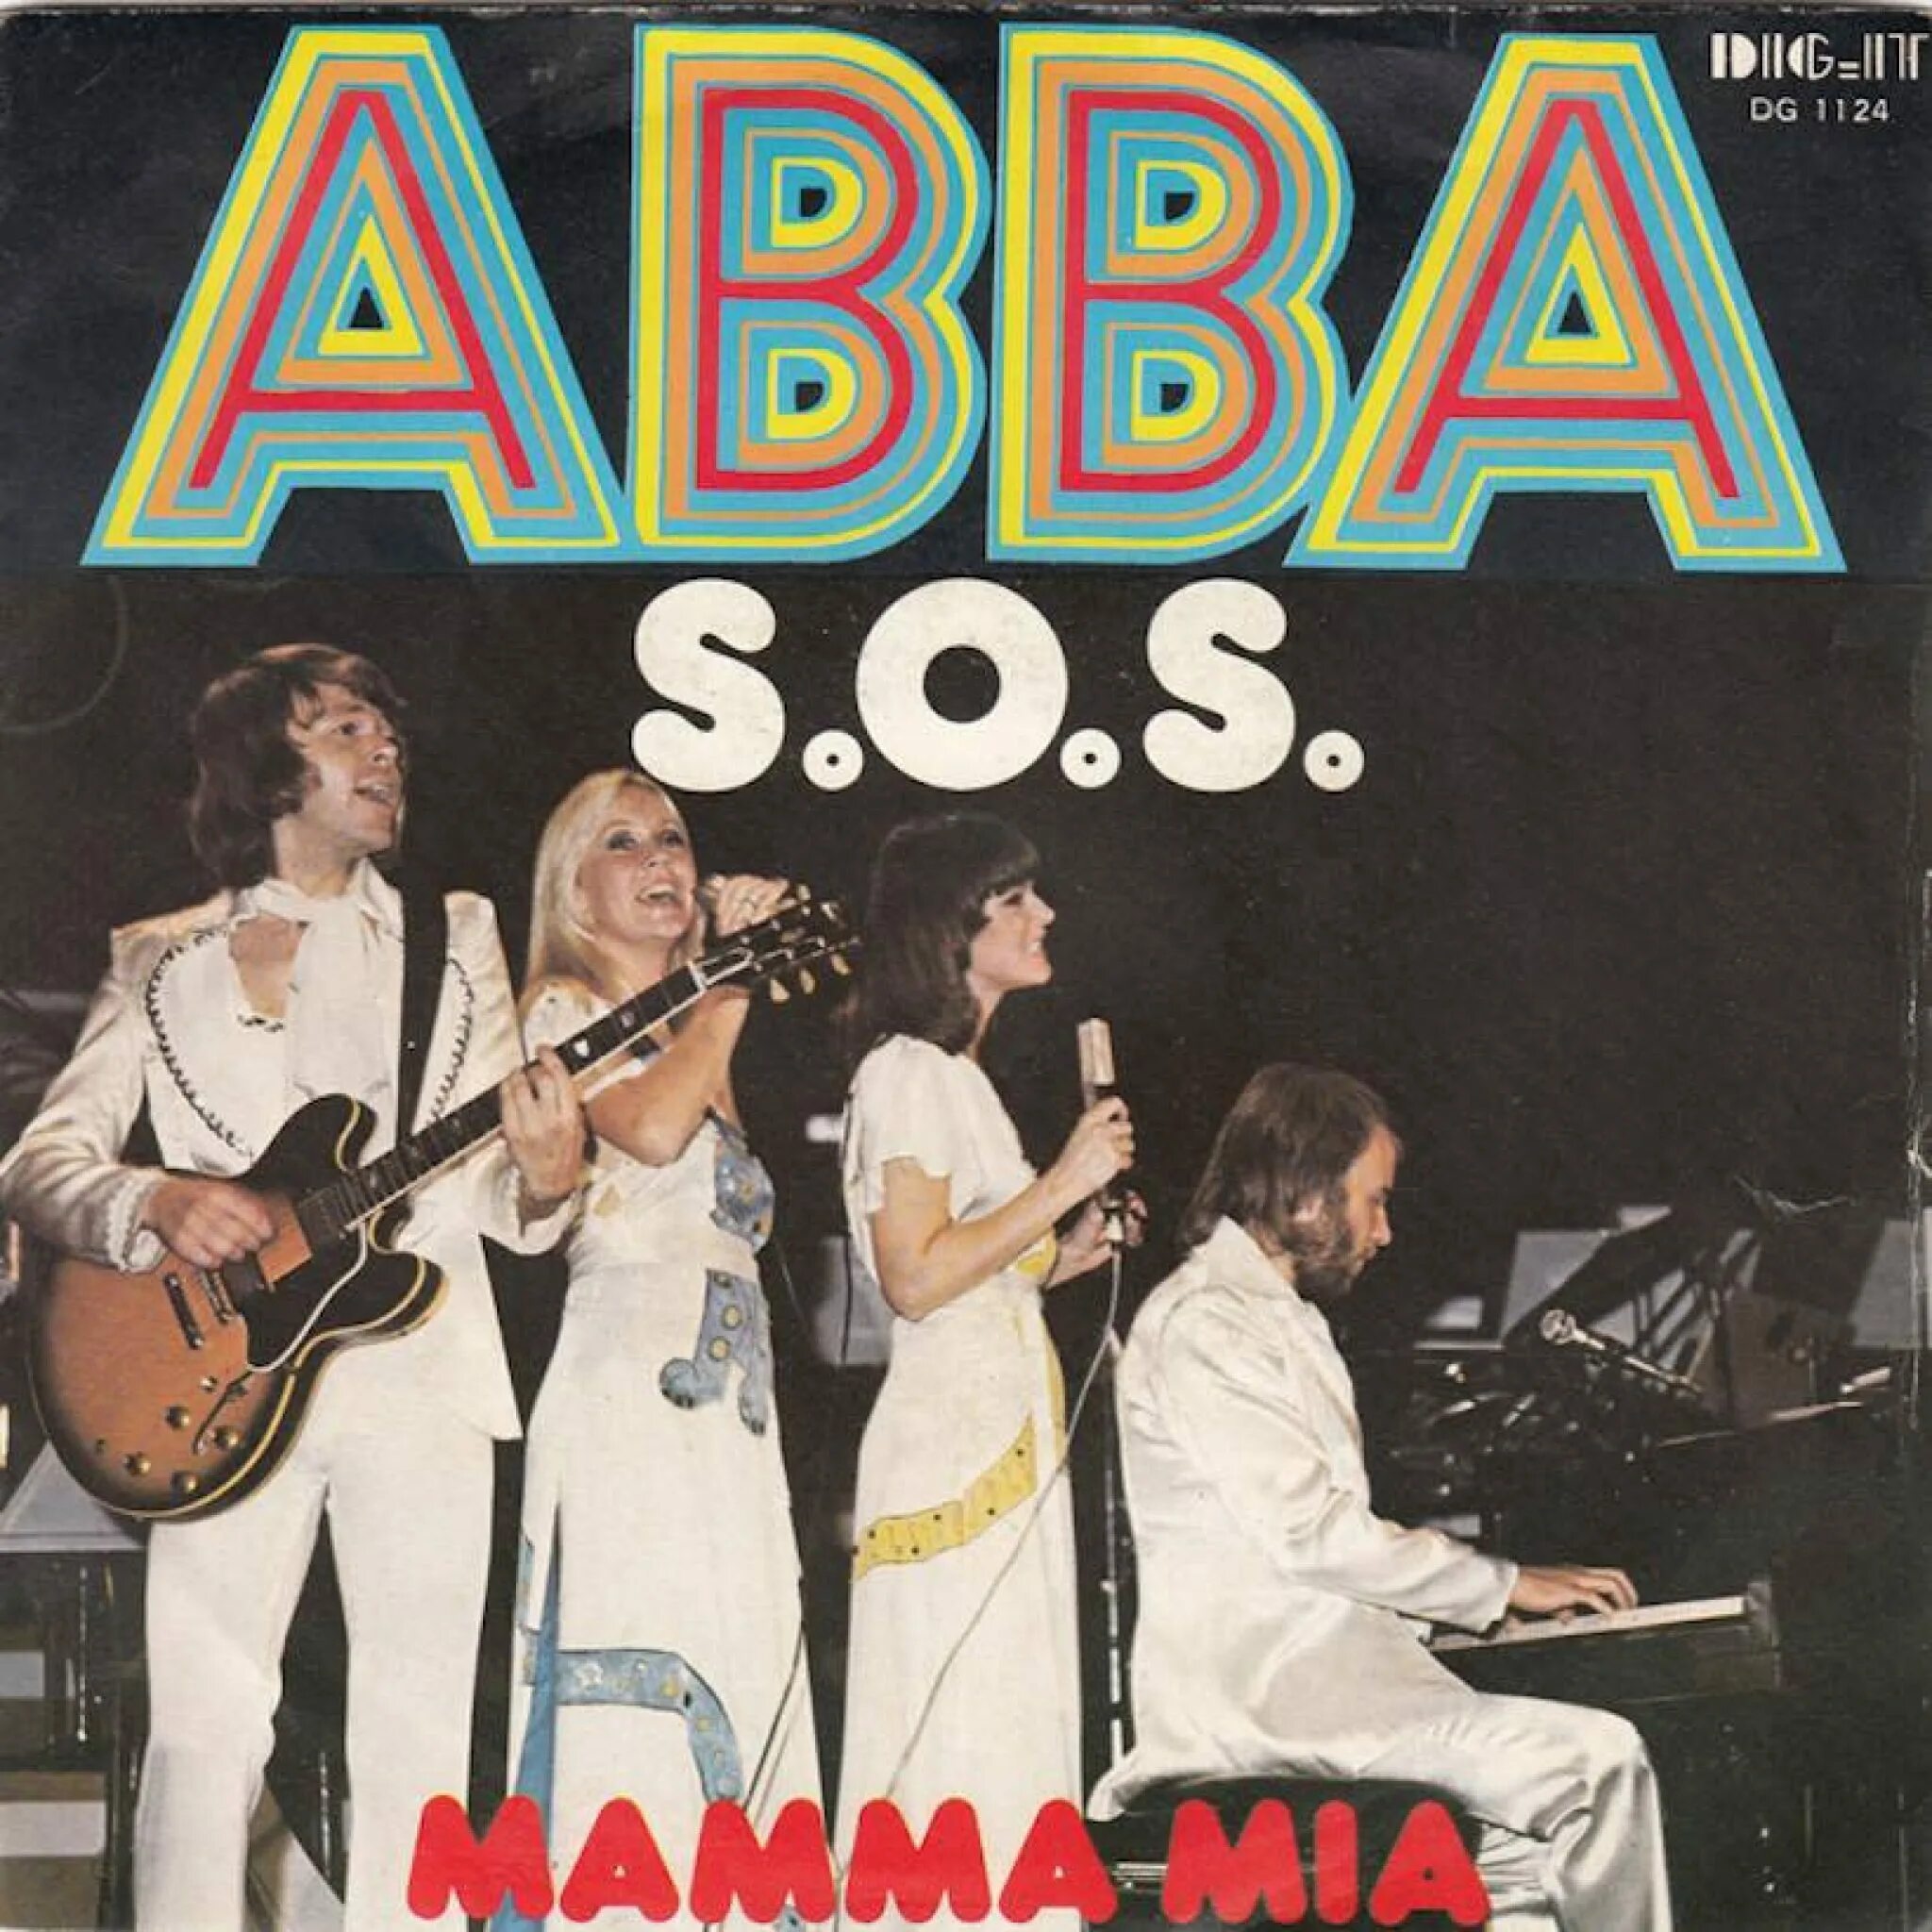 ABBA CD 1975. ABBA - S.O.S. (1975). ABBA SOS 1975. Абба обложка 1975. Абба сос